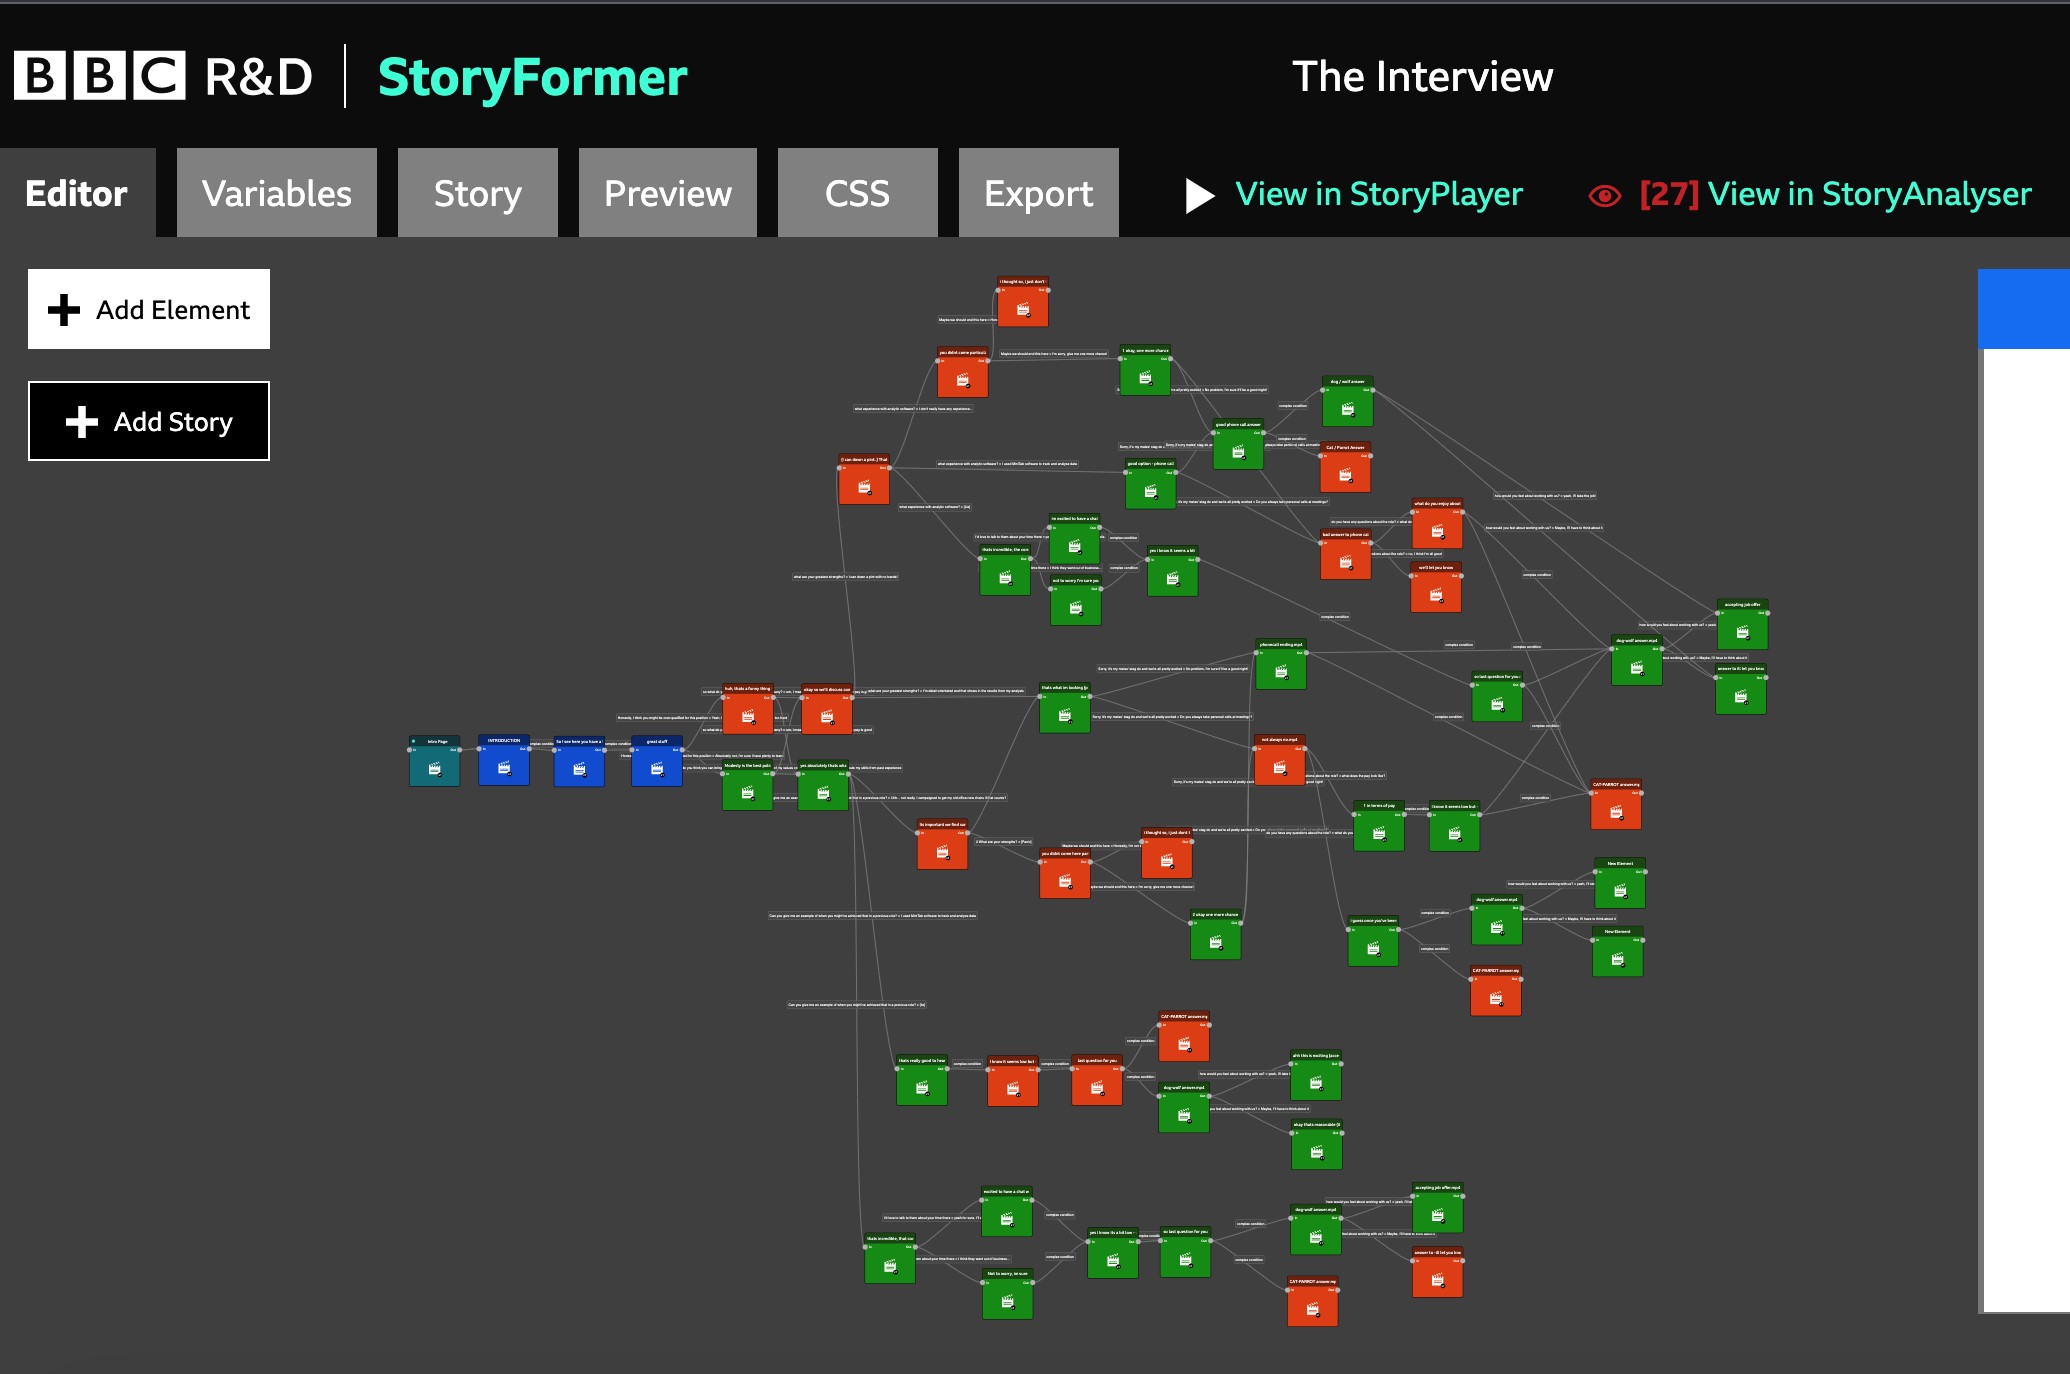 Image shows interactive storyformer